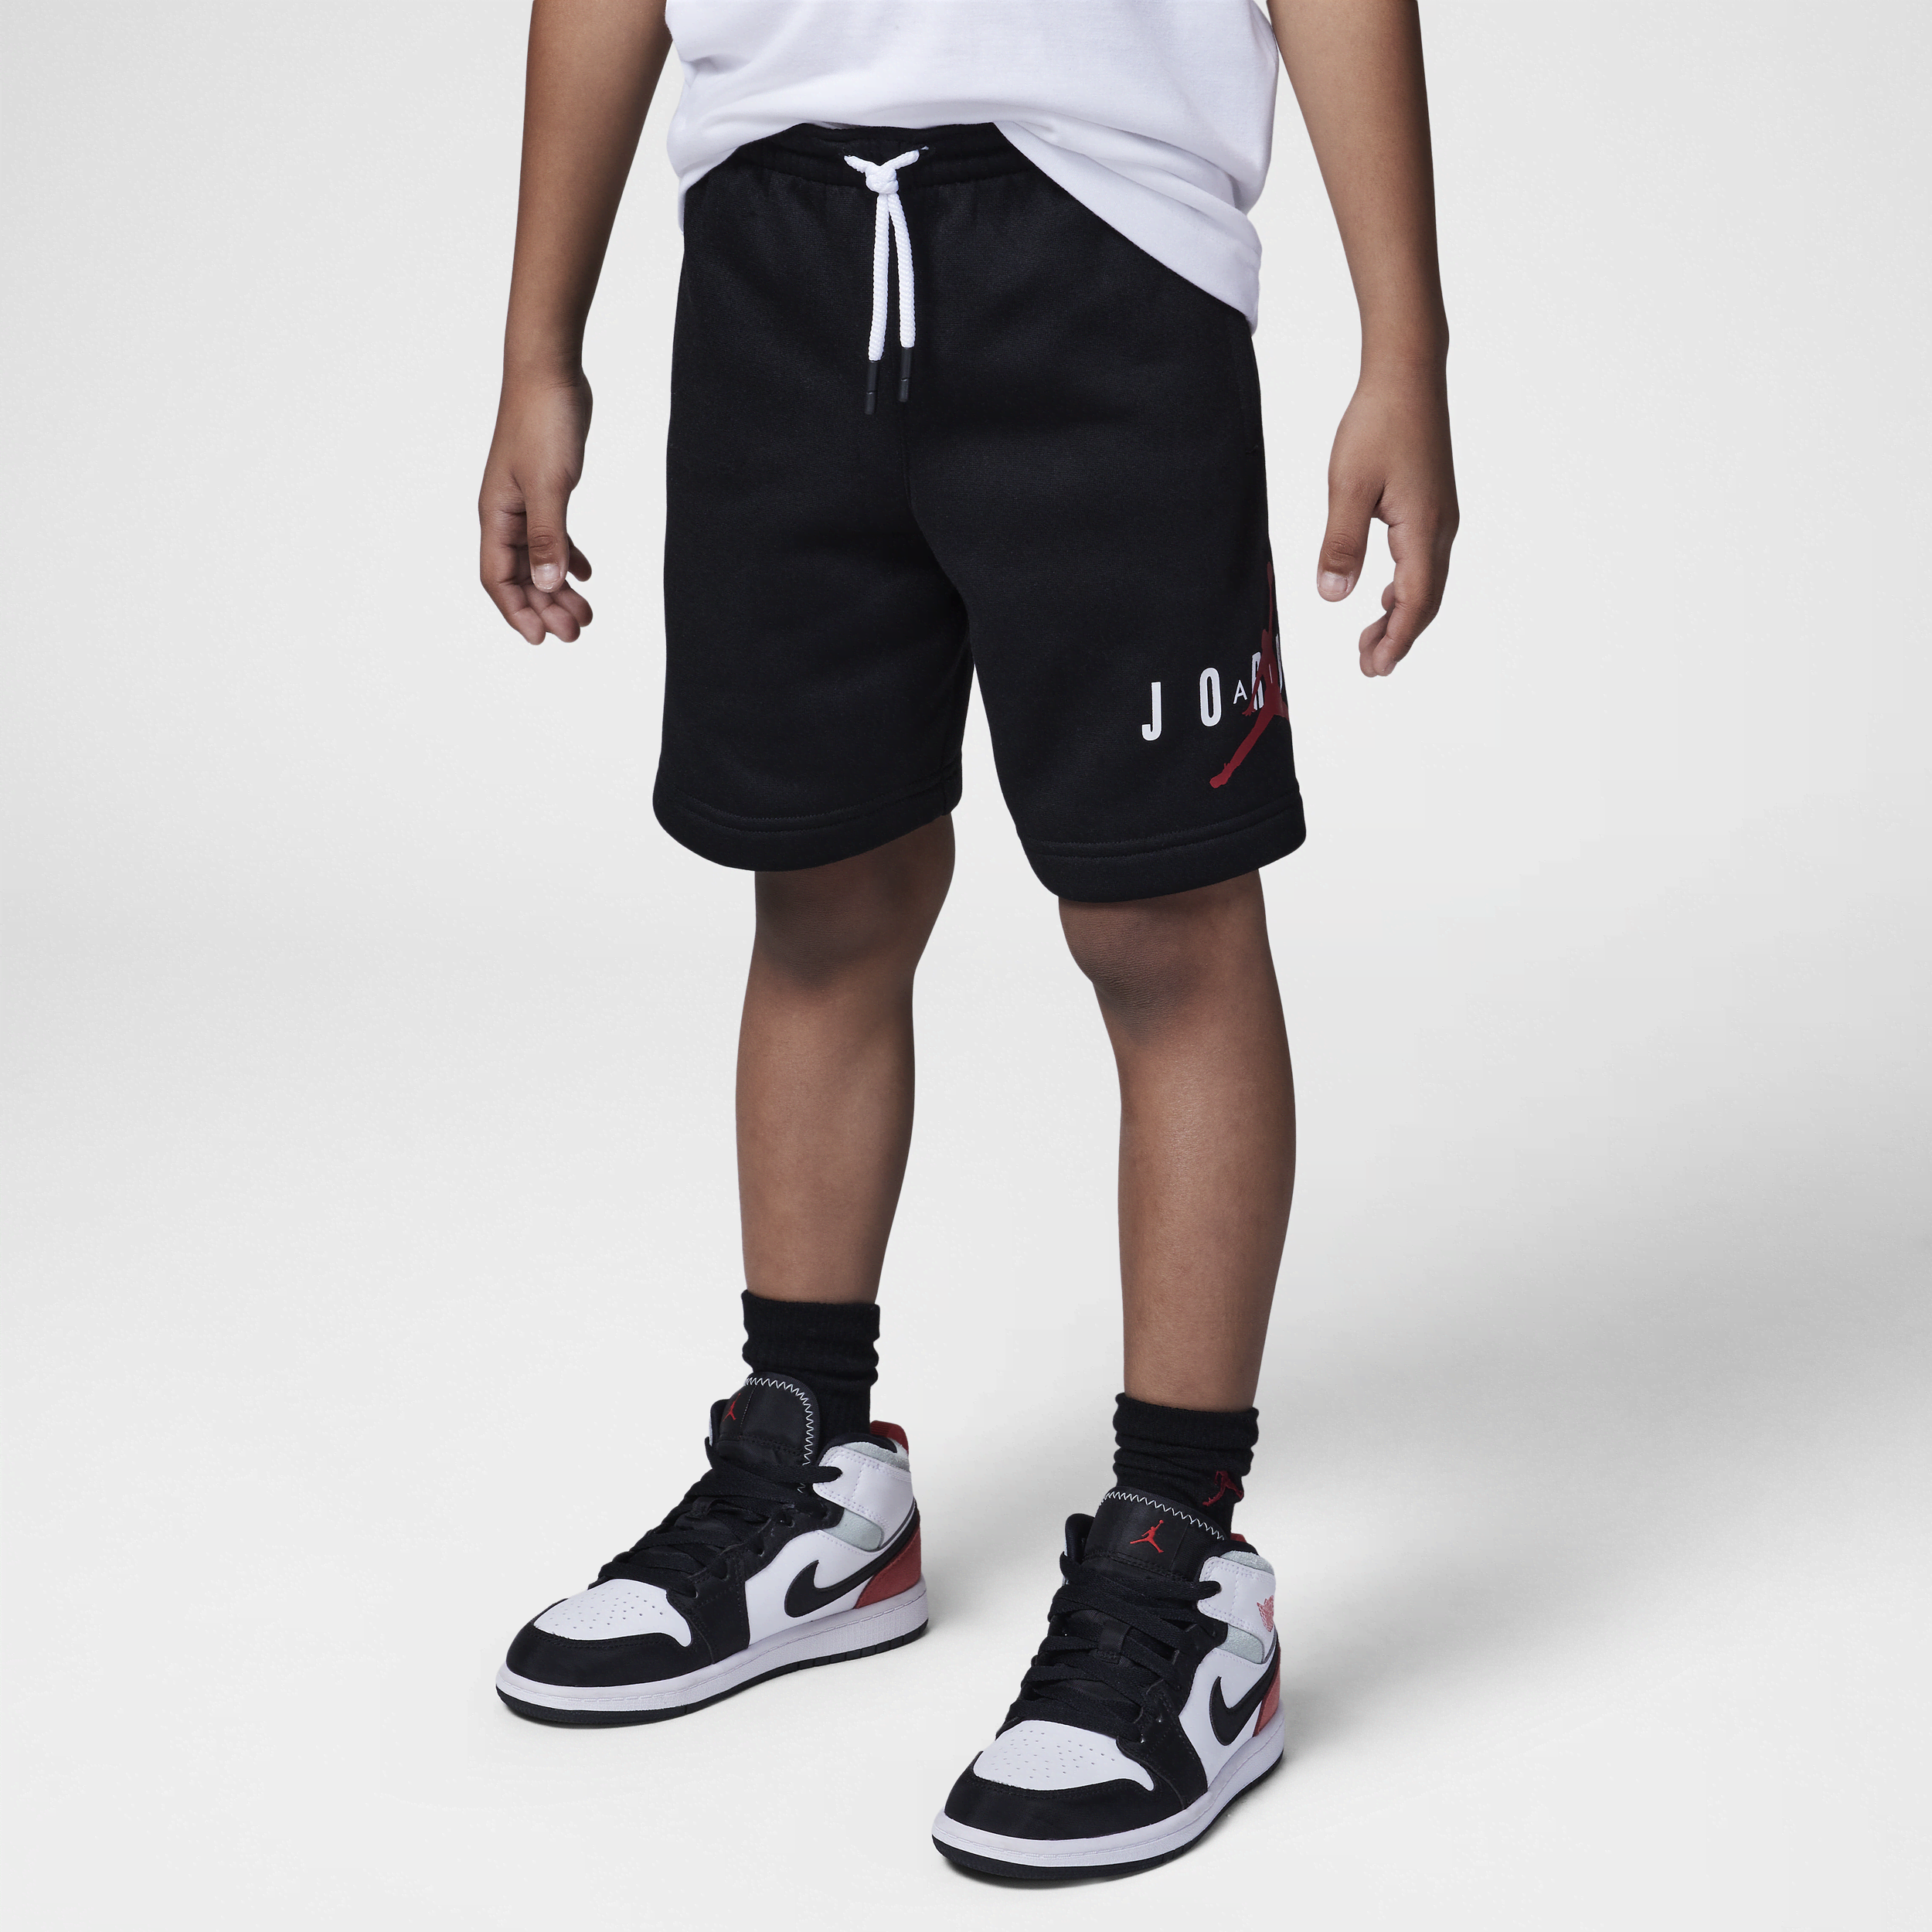 Nike Shorts in fleece sostenibile Jordan – Bambino/a - Nero